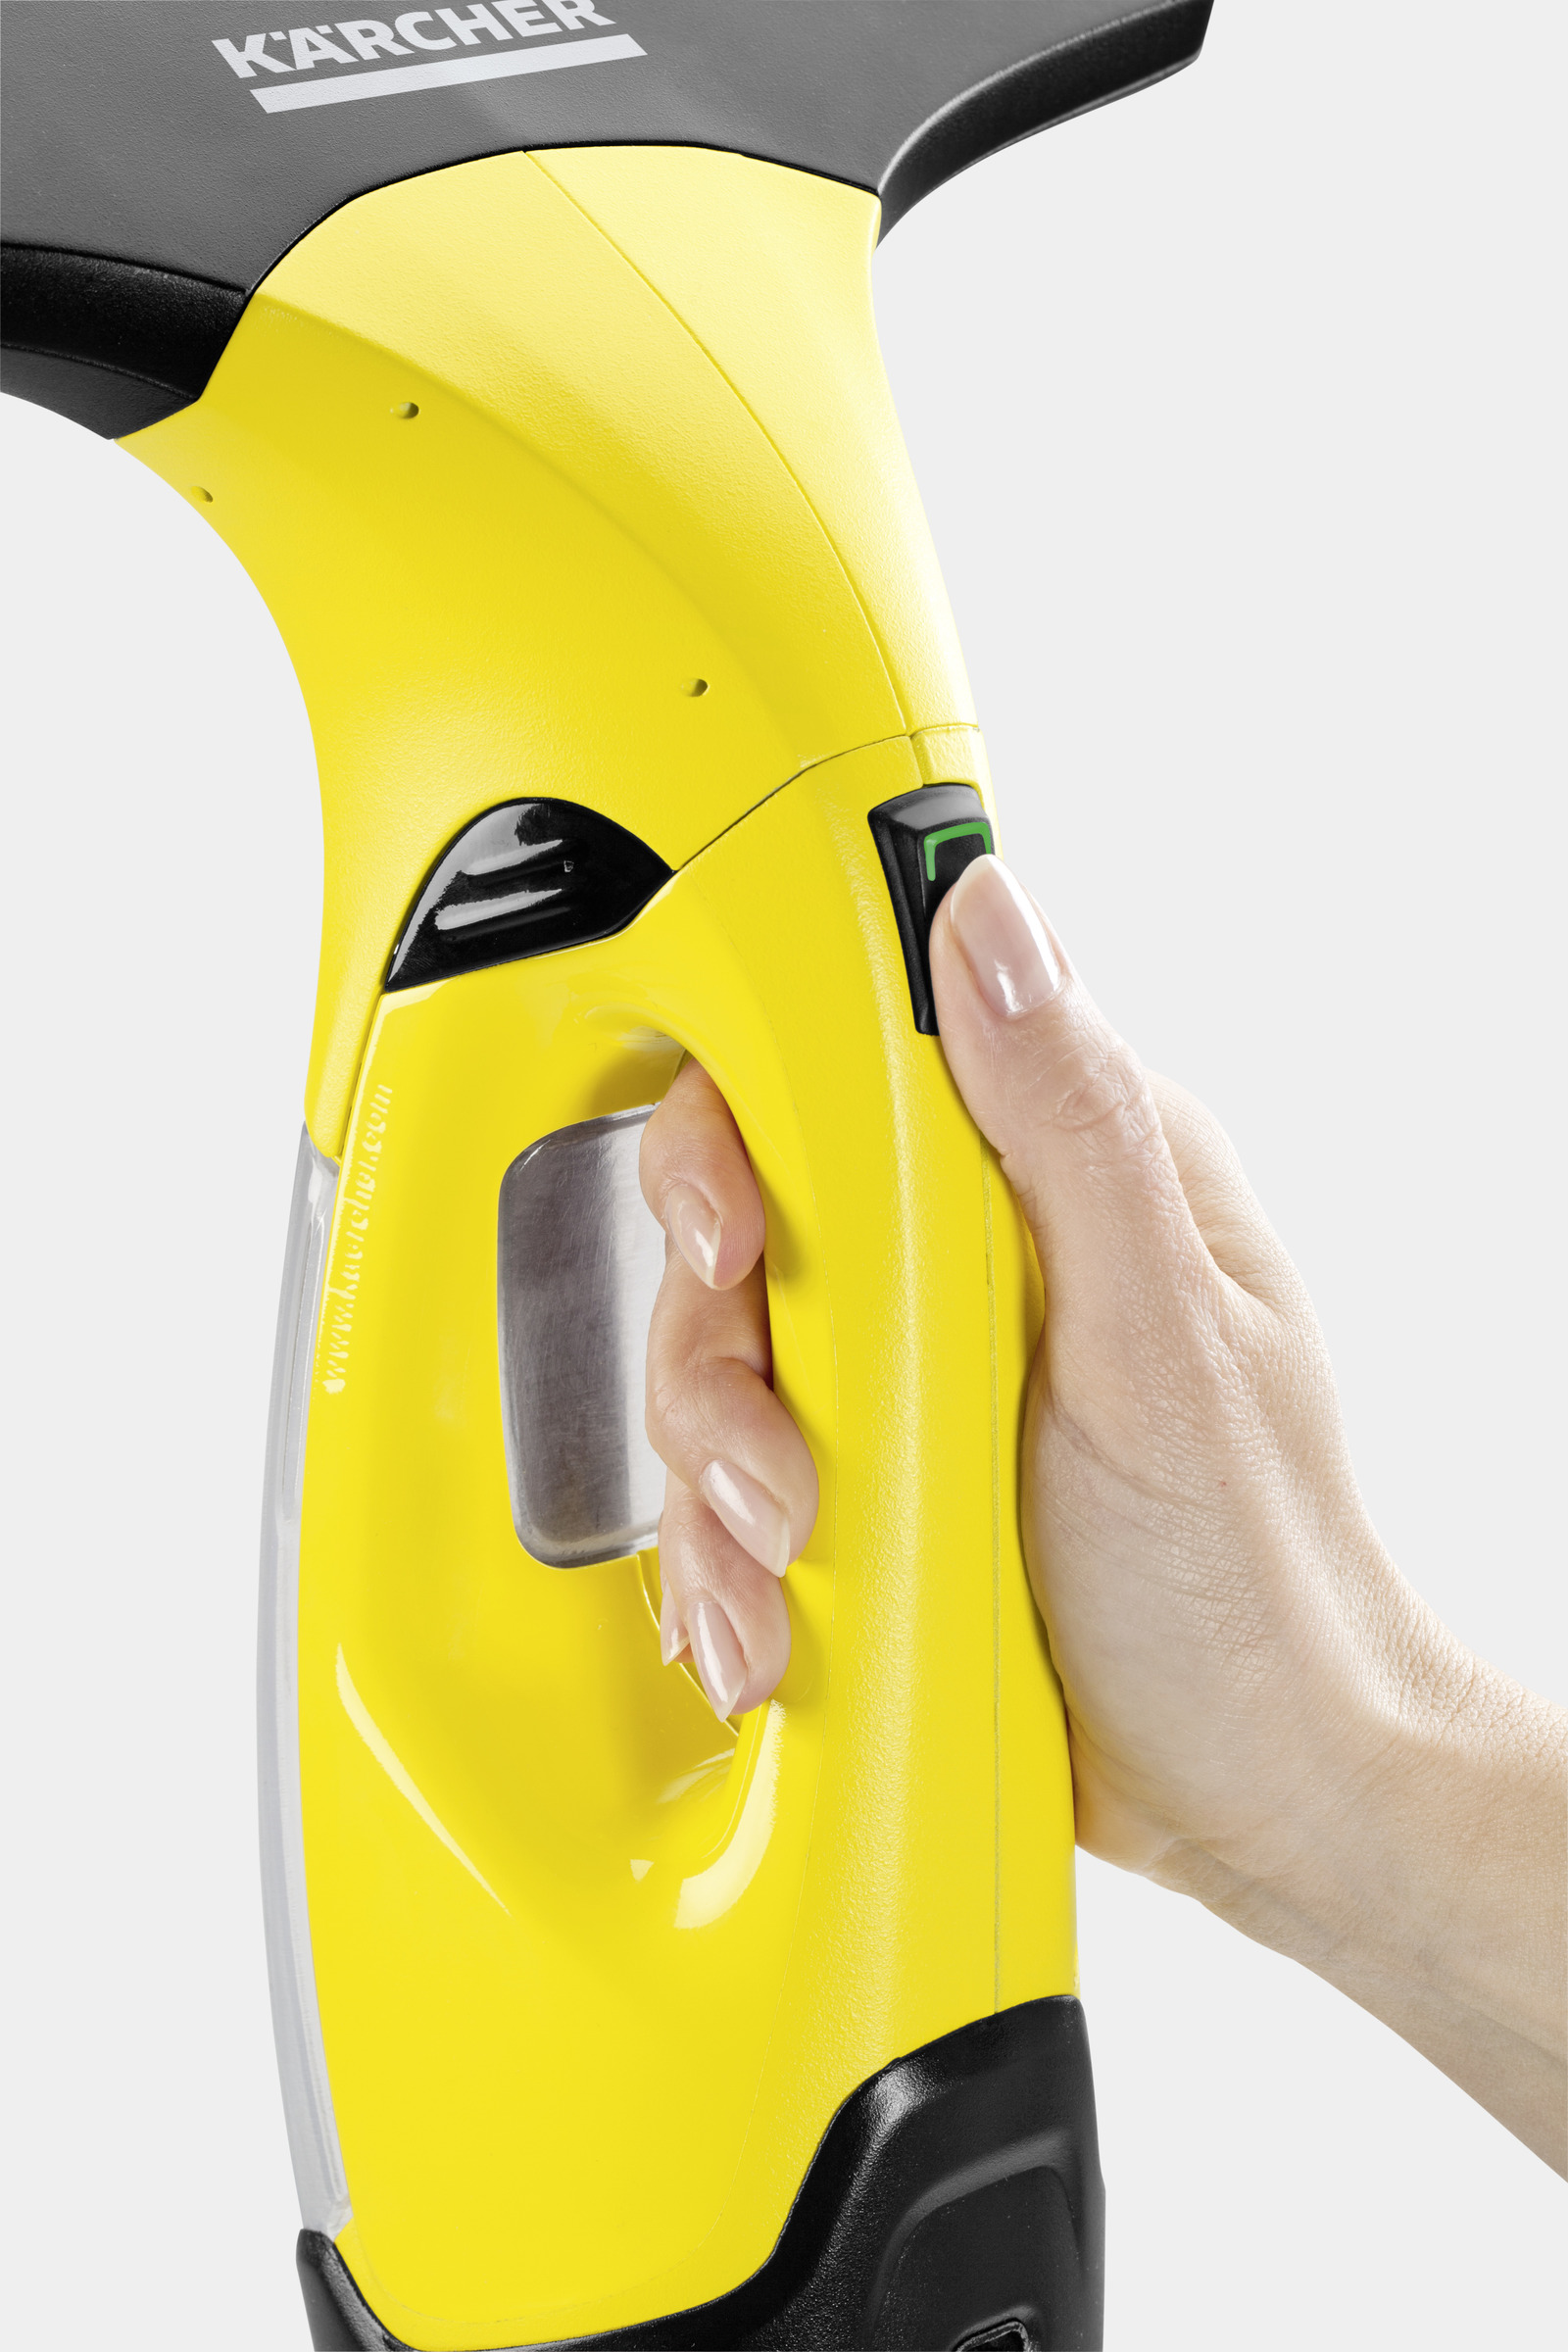 Kärcher Wv2 Premium 2nd Generation Window Vacuum Cleaner for sale online